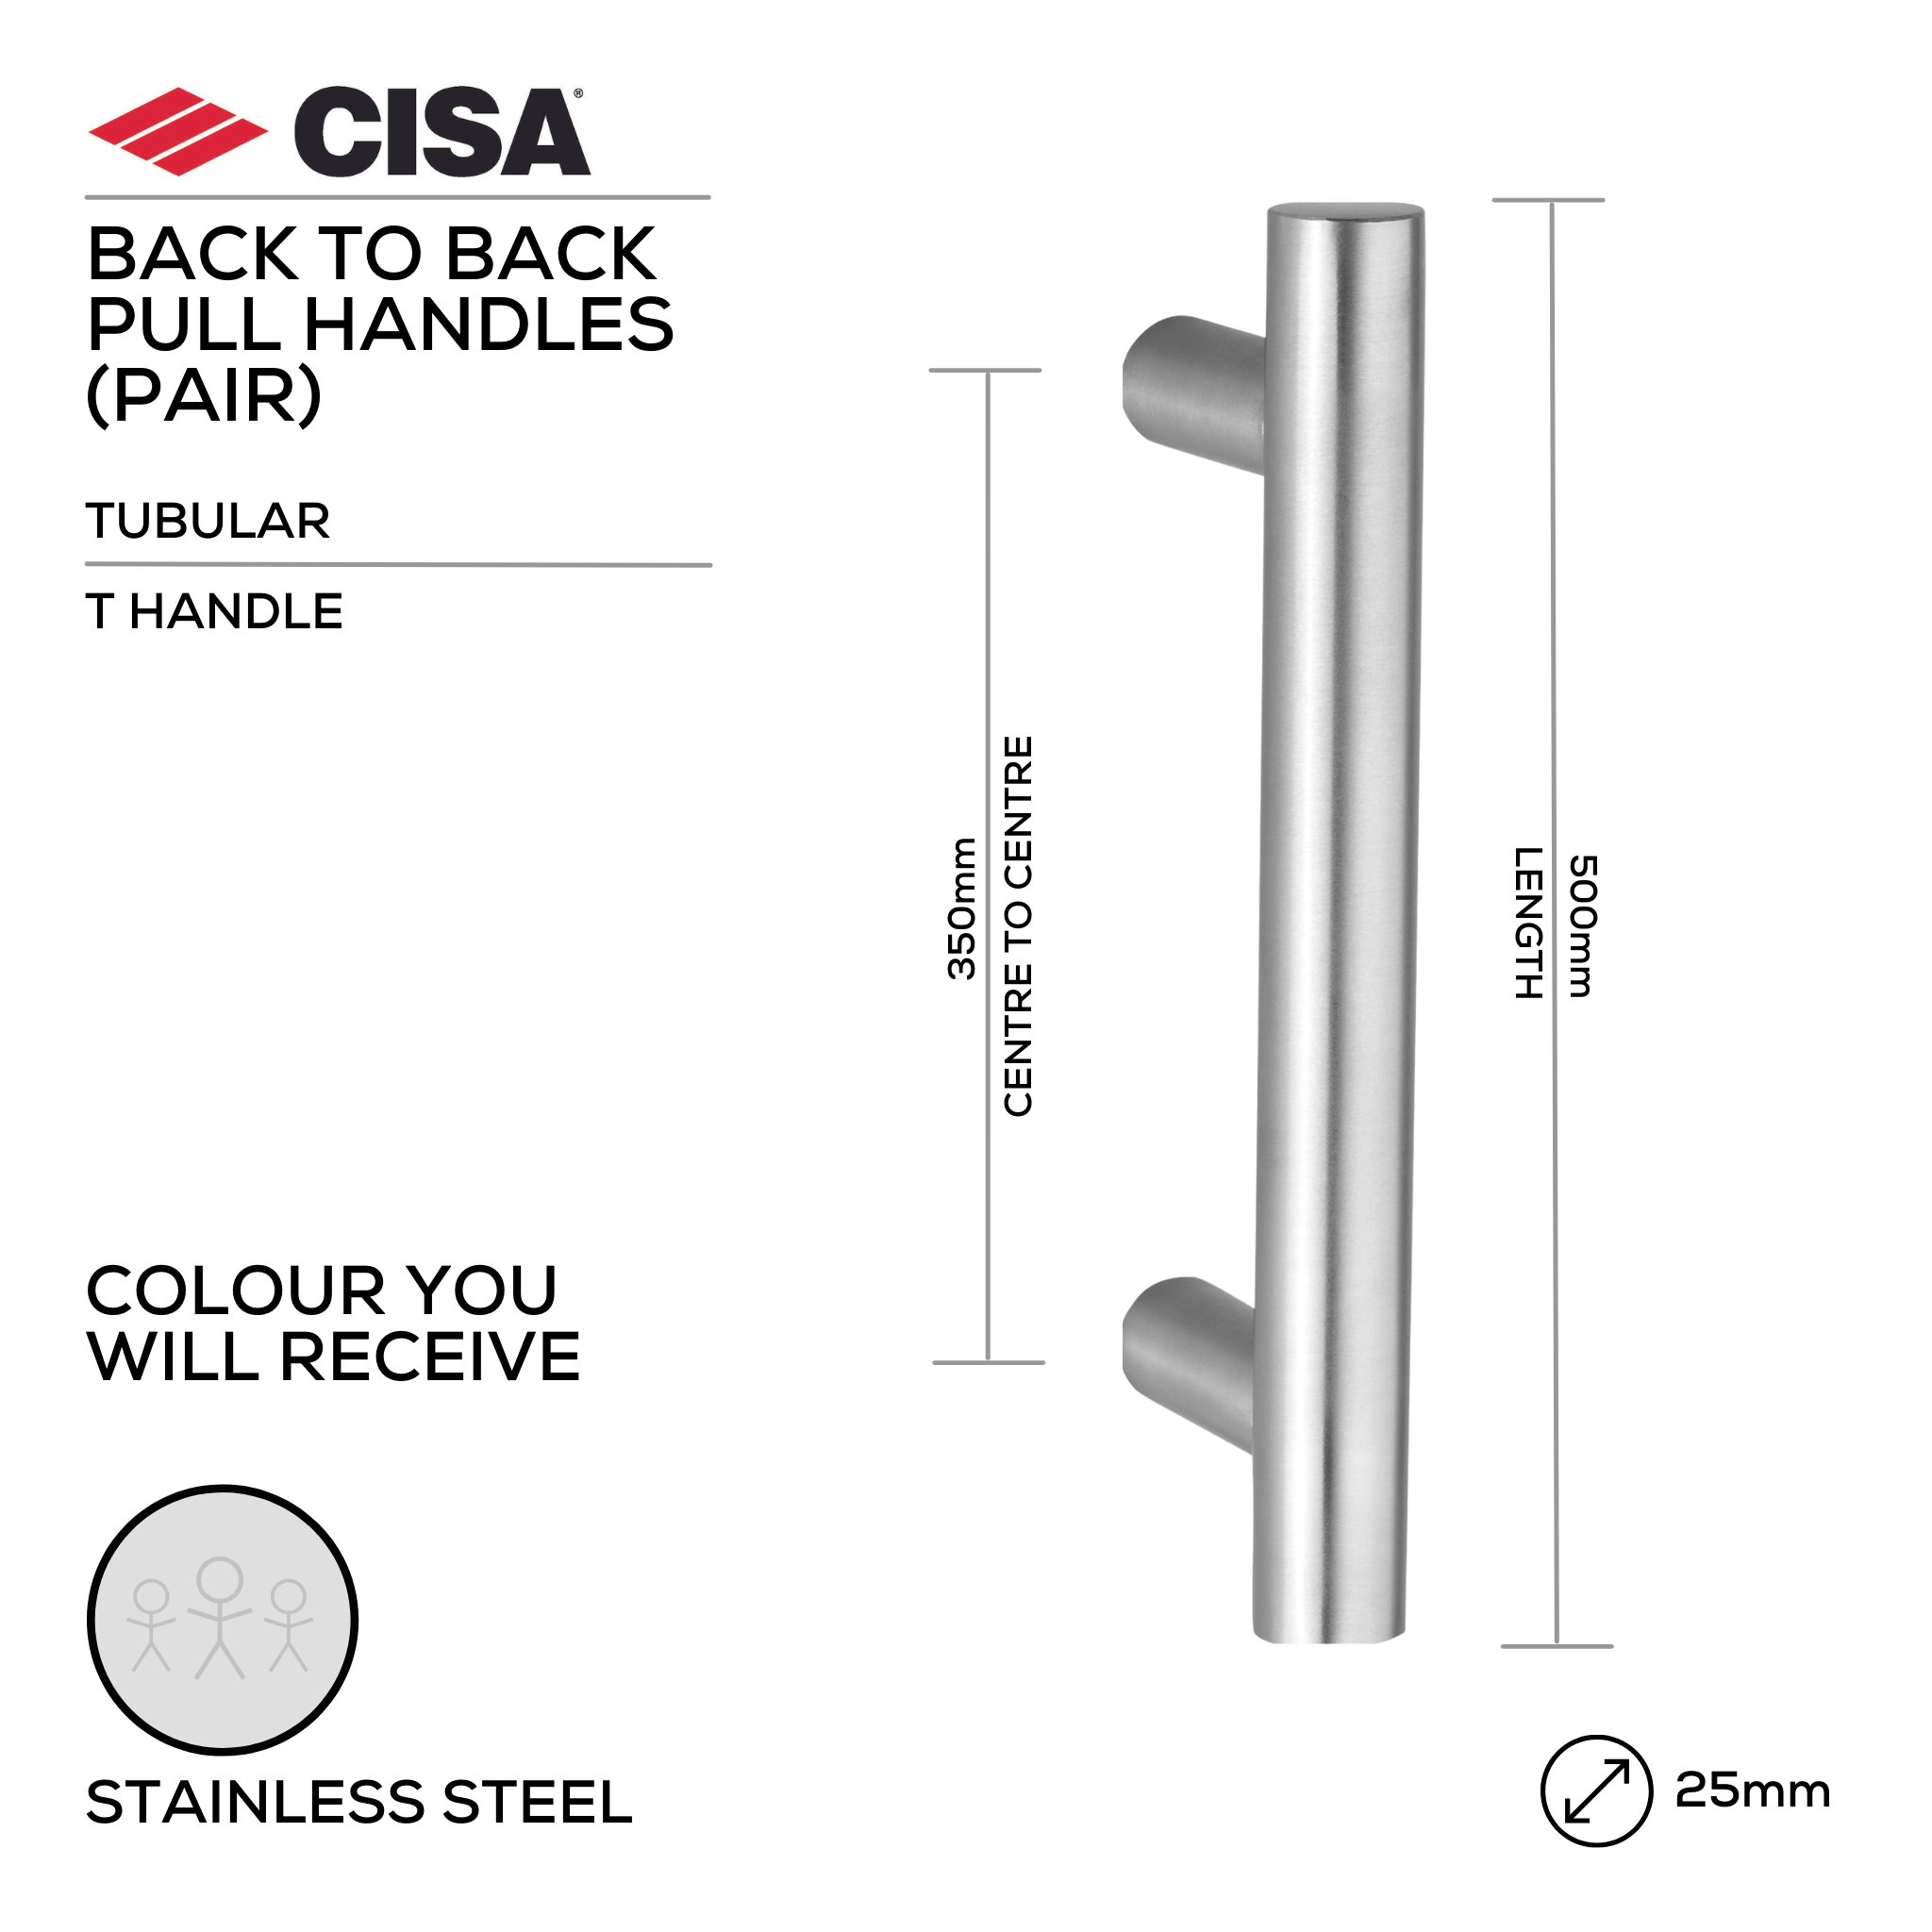 FP.T102.BB.SS, Pull Handle, Tubular, T Handle, BTB, 25mm (Ø) x 500mm (l) x 350mm (ctc), Stainless Steel, CISA